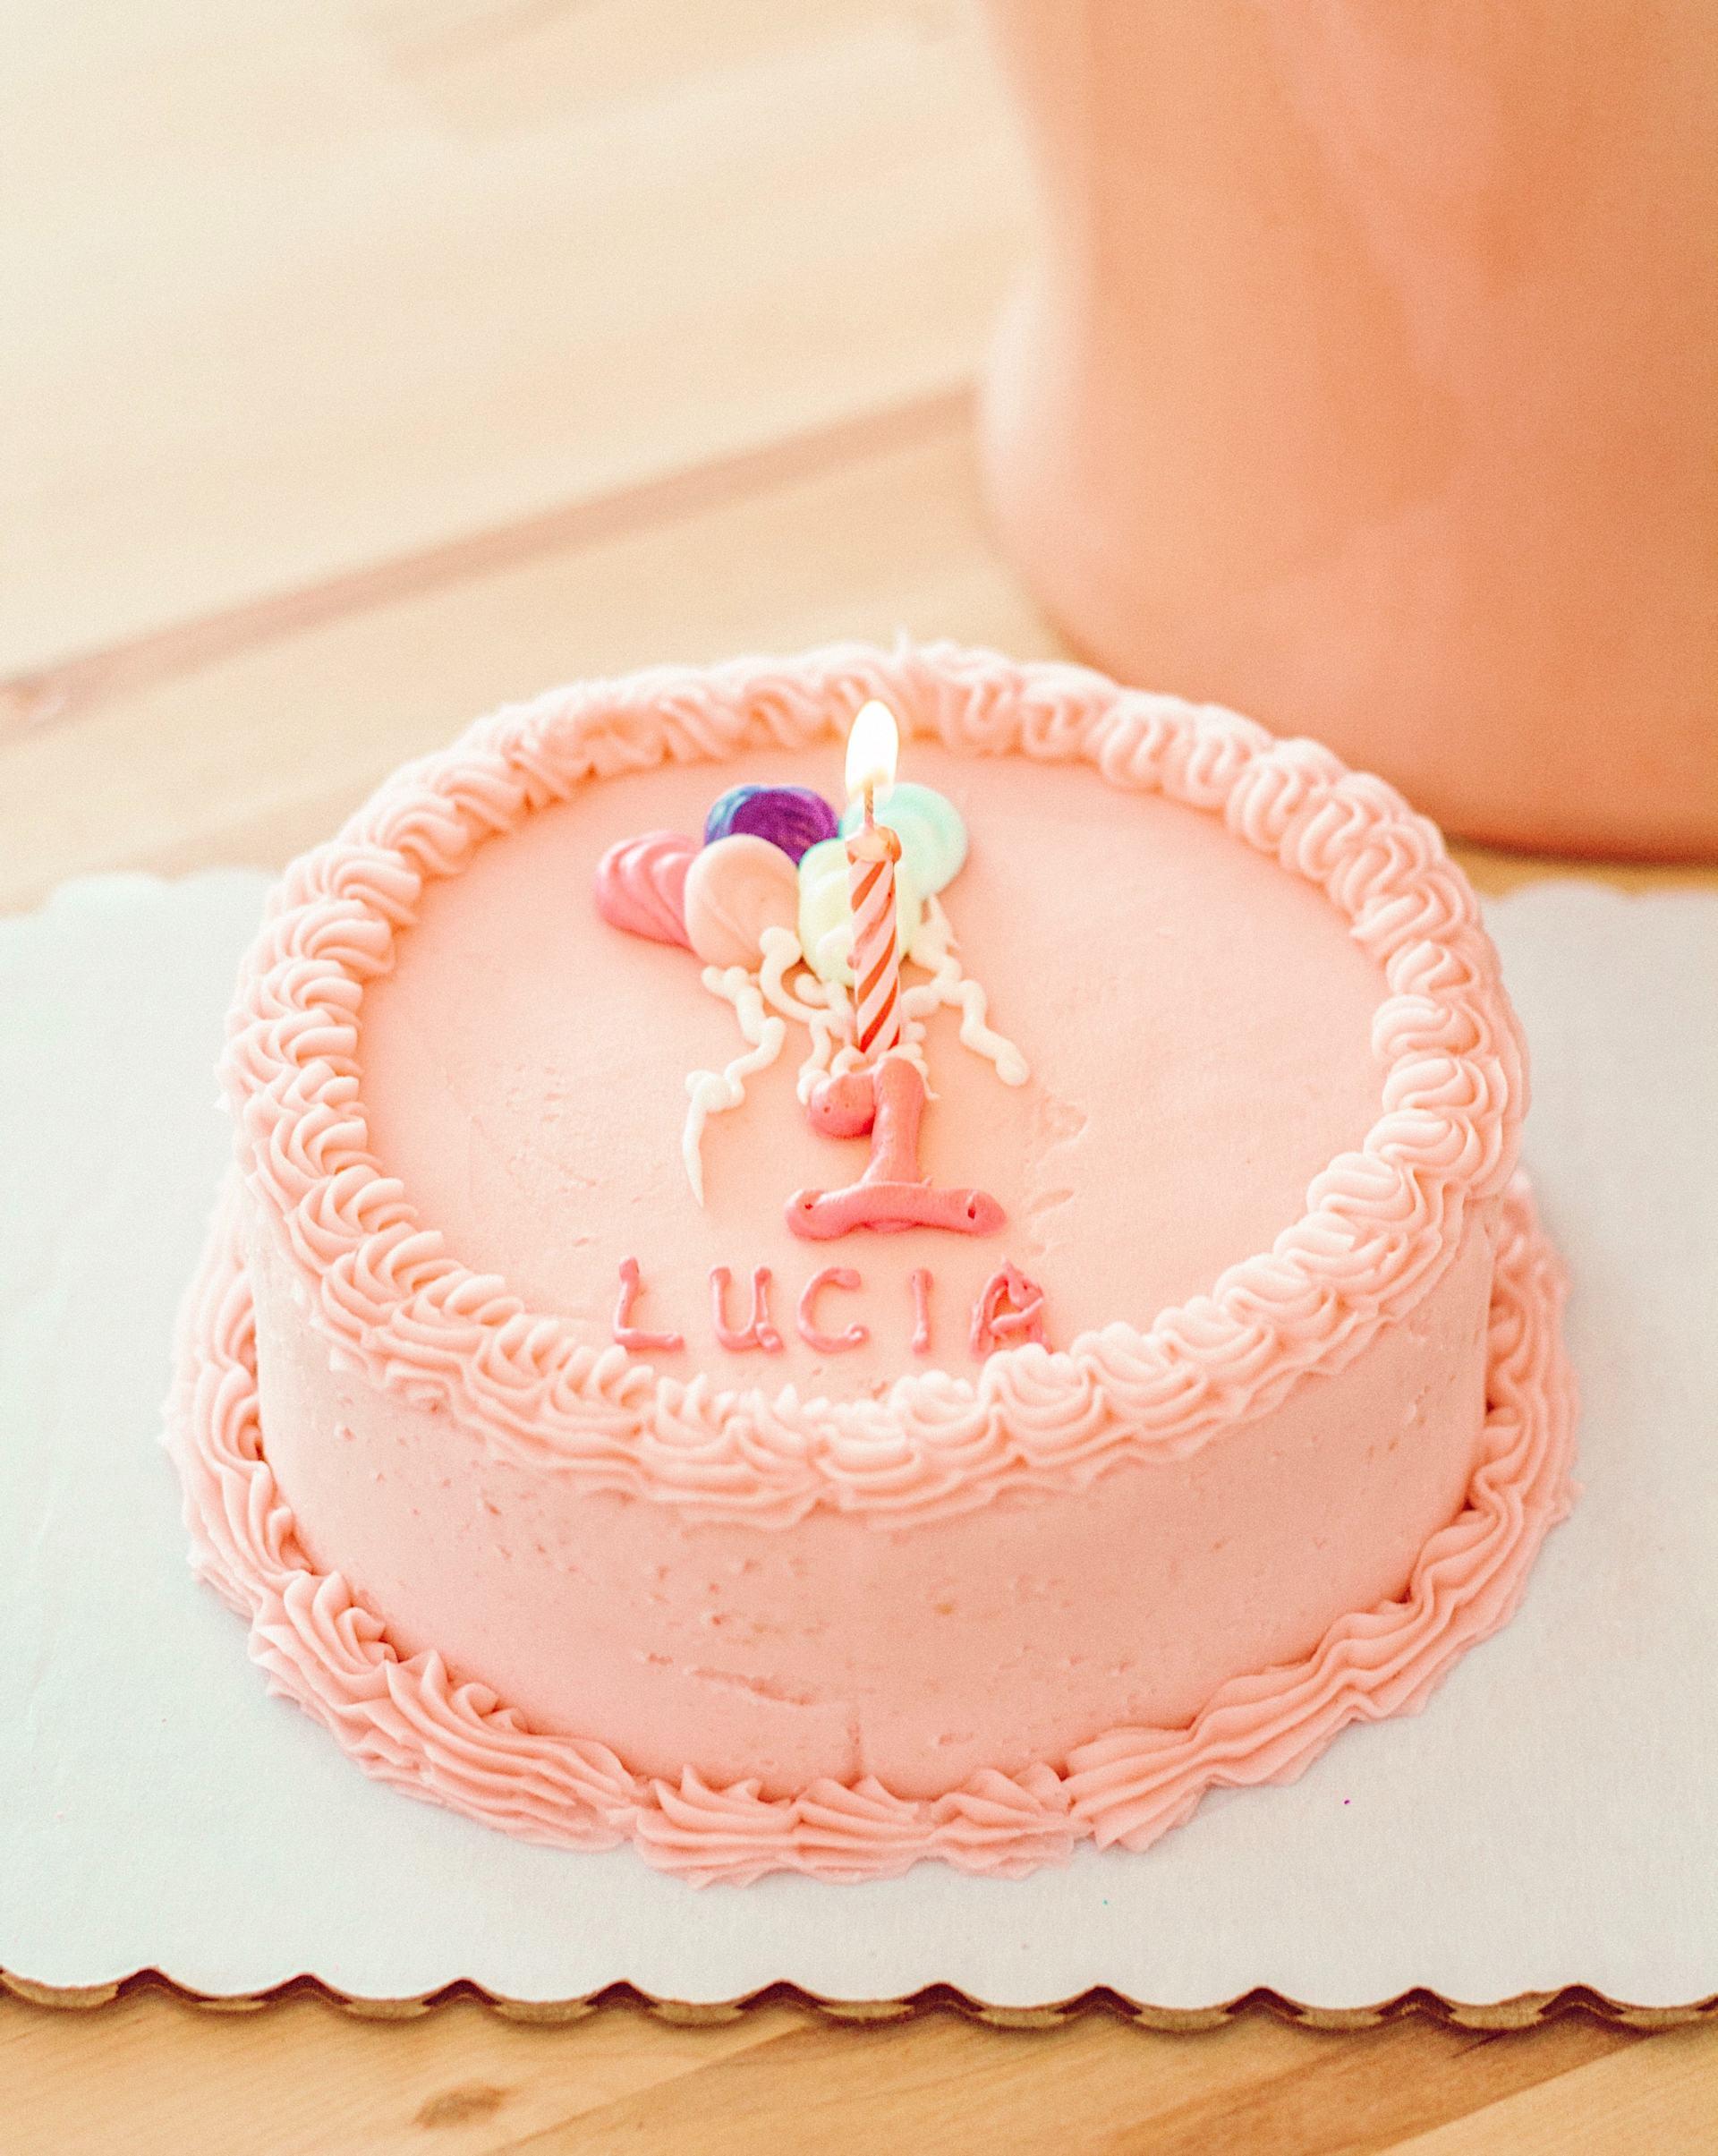 Lucia’s 1st Birthday